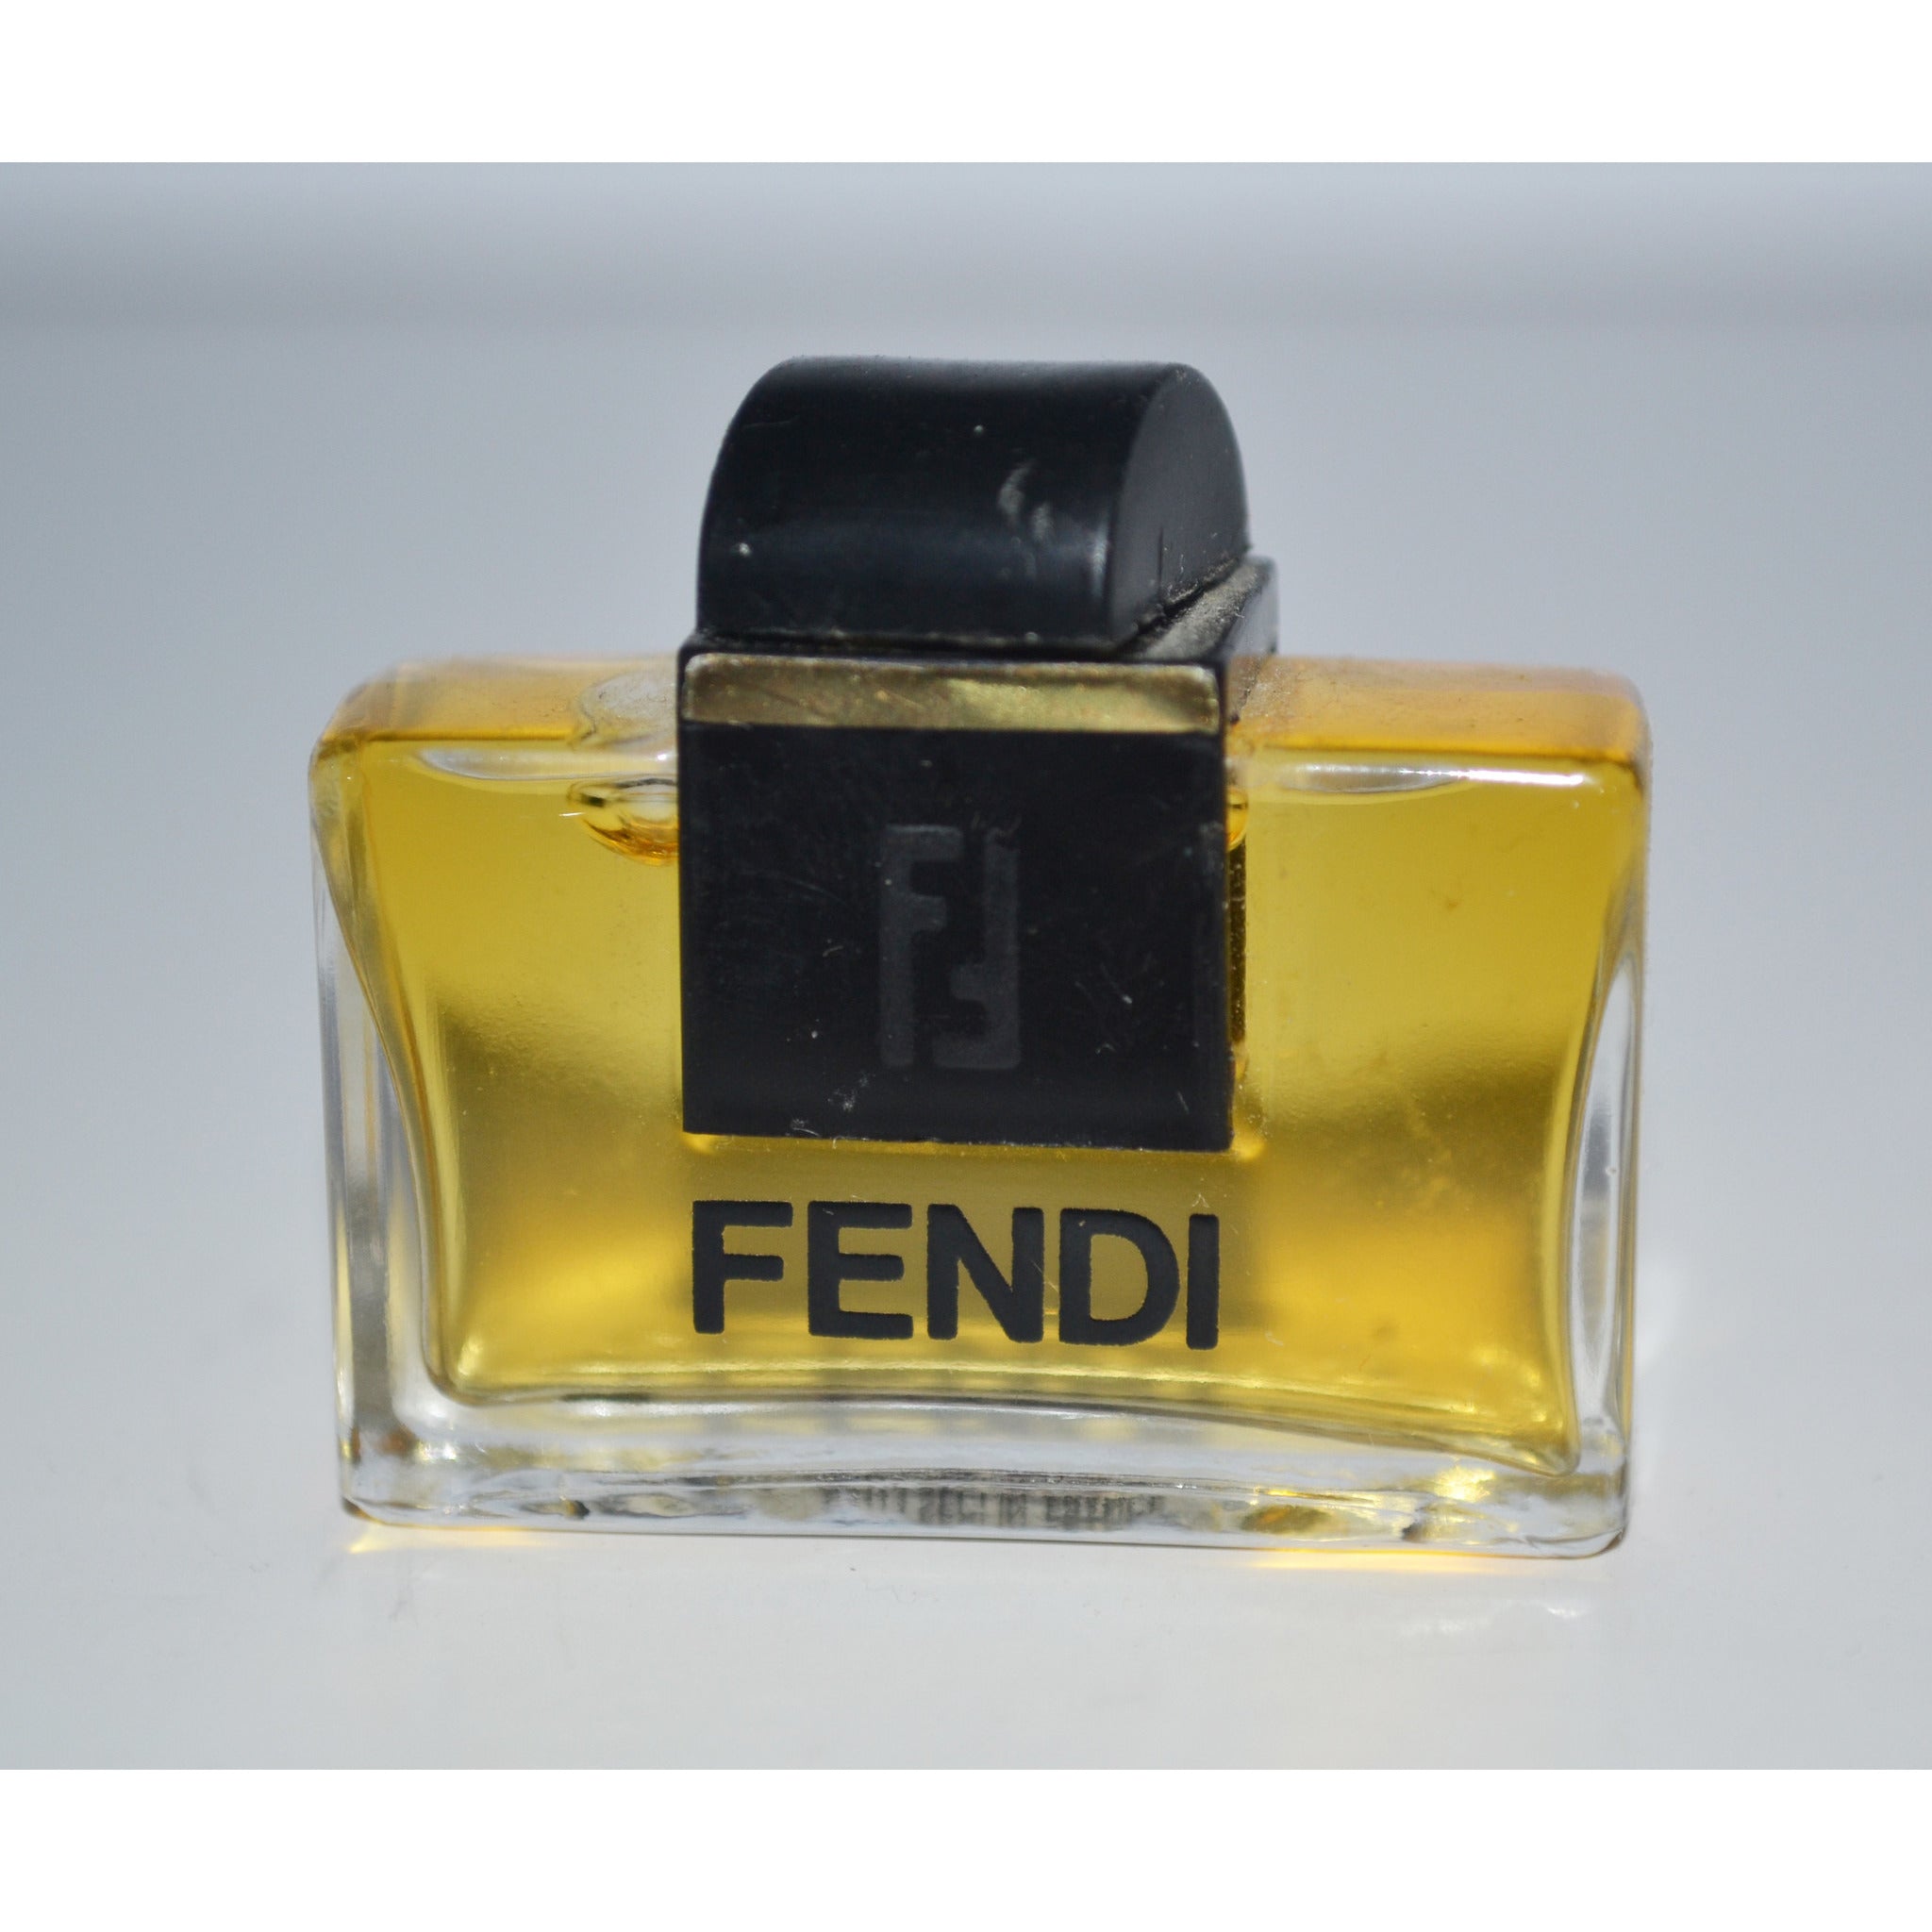 Discontinued Fendi Perfume Mini – Quirky Finds